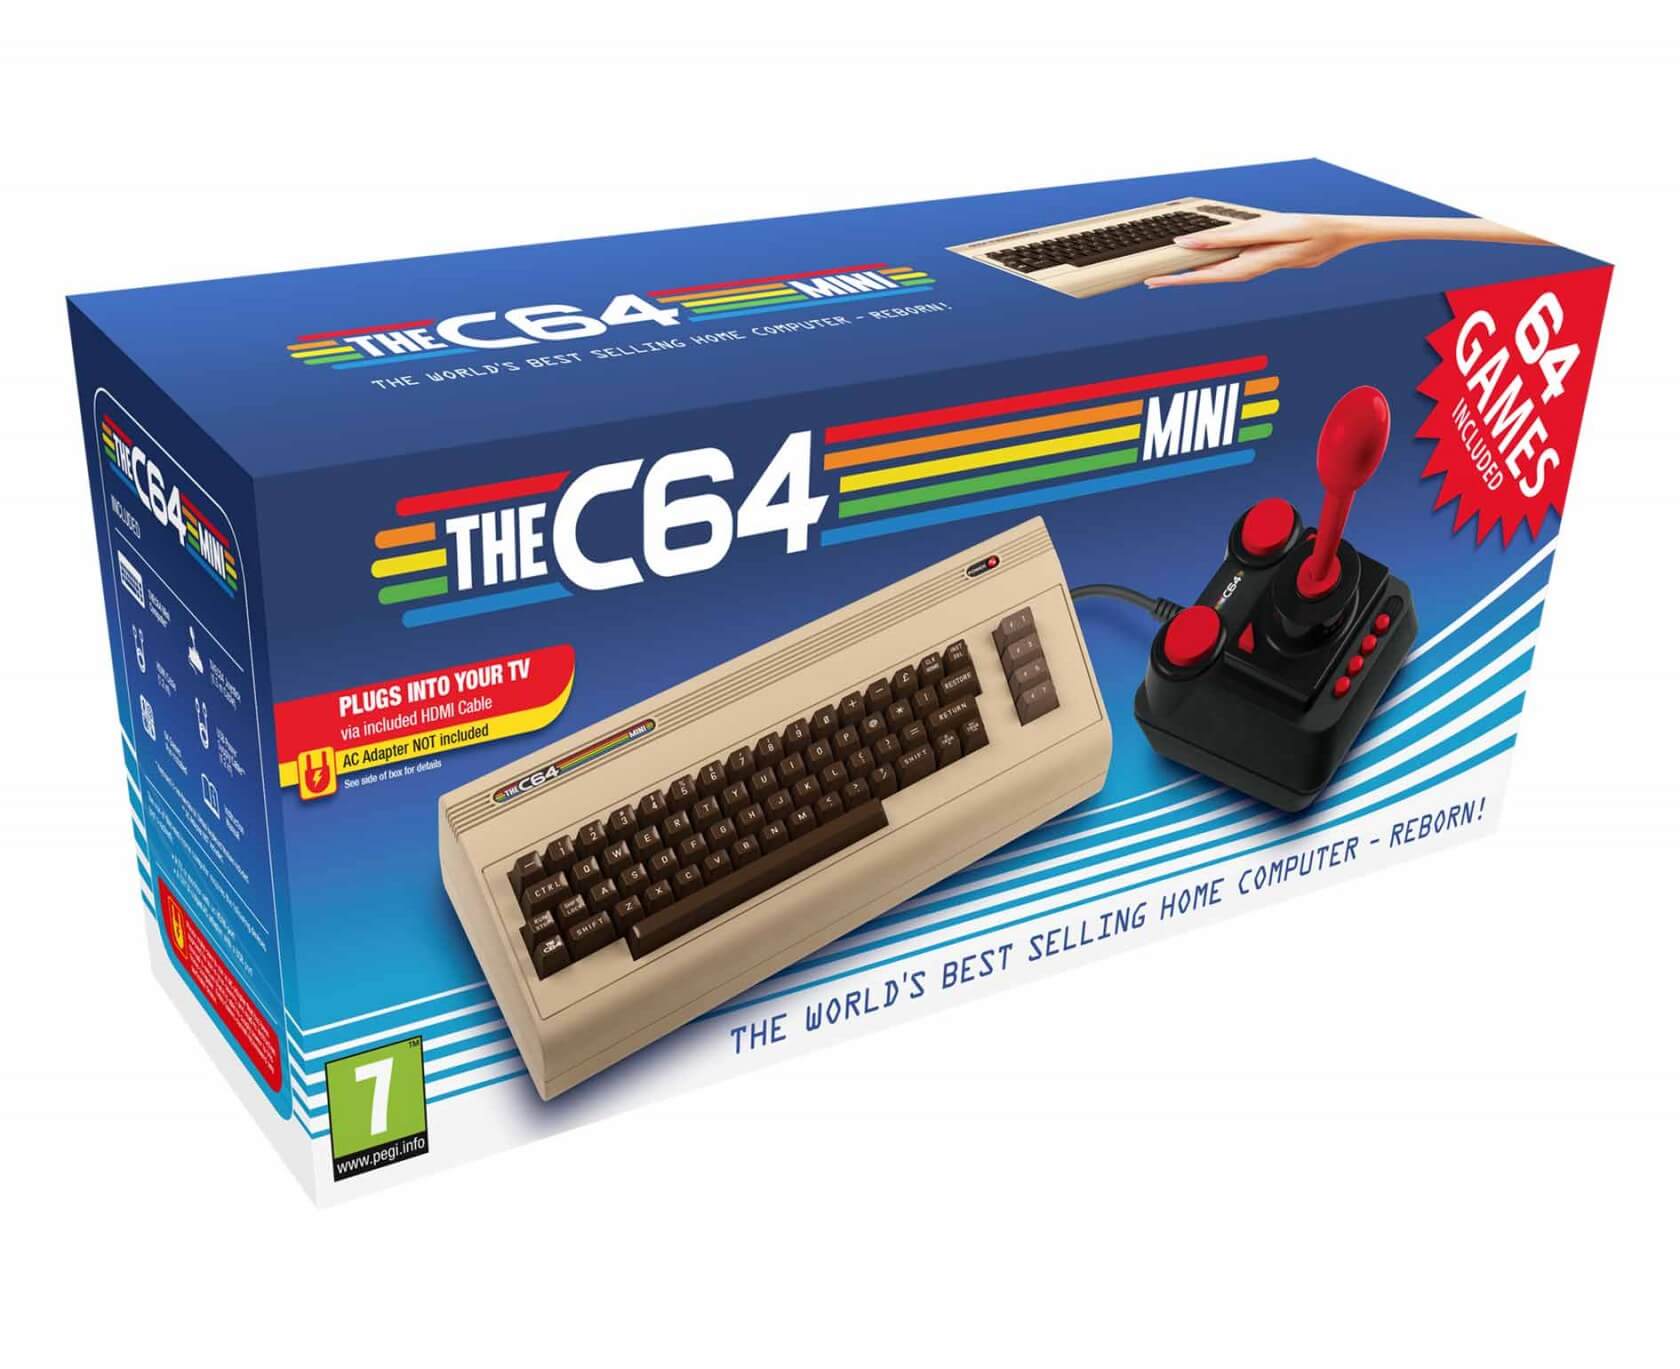 Commodore 64 Mini, 9 Ekim'de satışa sunulacak